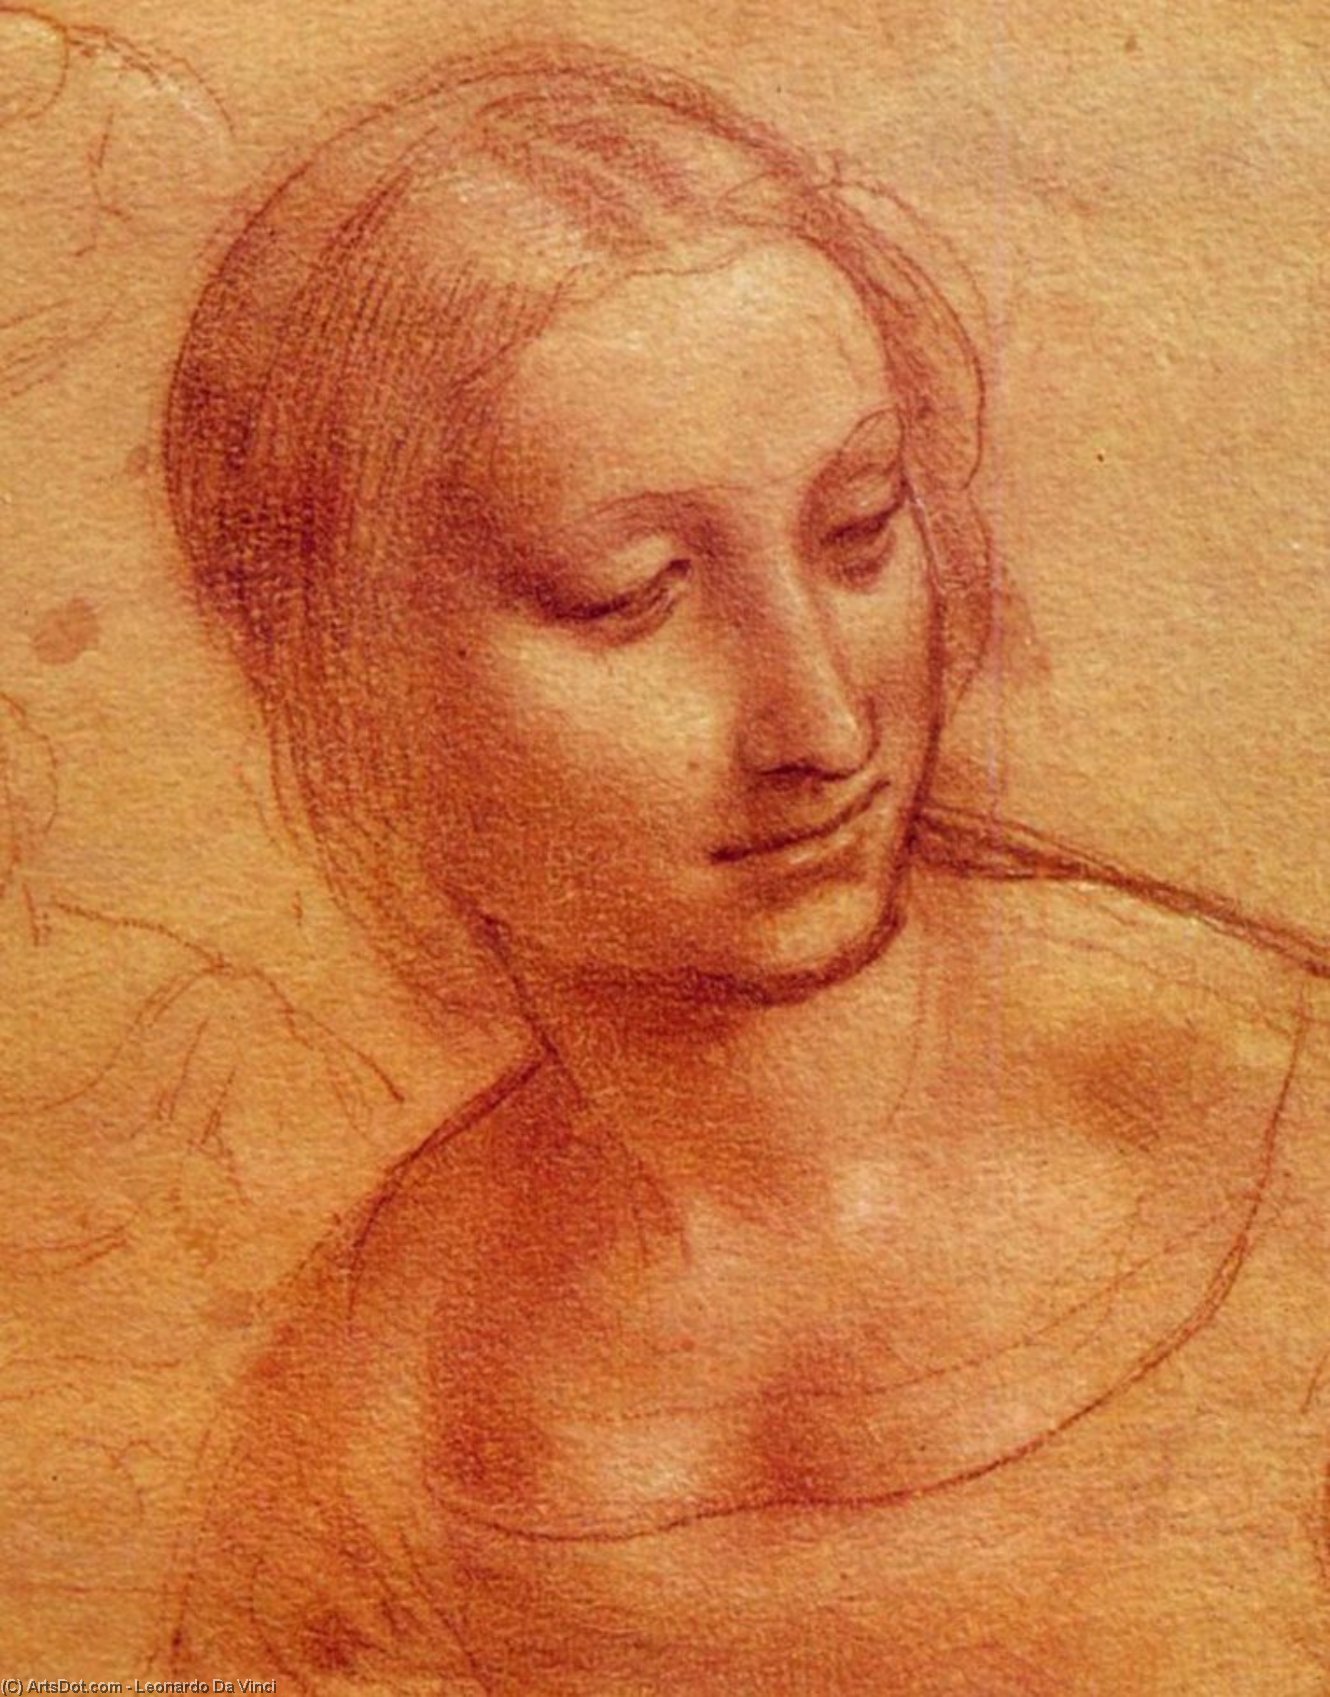 Рисунки эпохи возрождения. Леонардо да Винчи. Леонардо довинвинечи. Леанардо дв Винчи. Картины Леонардо да Винчи сангиной.